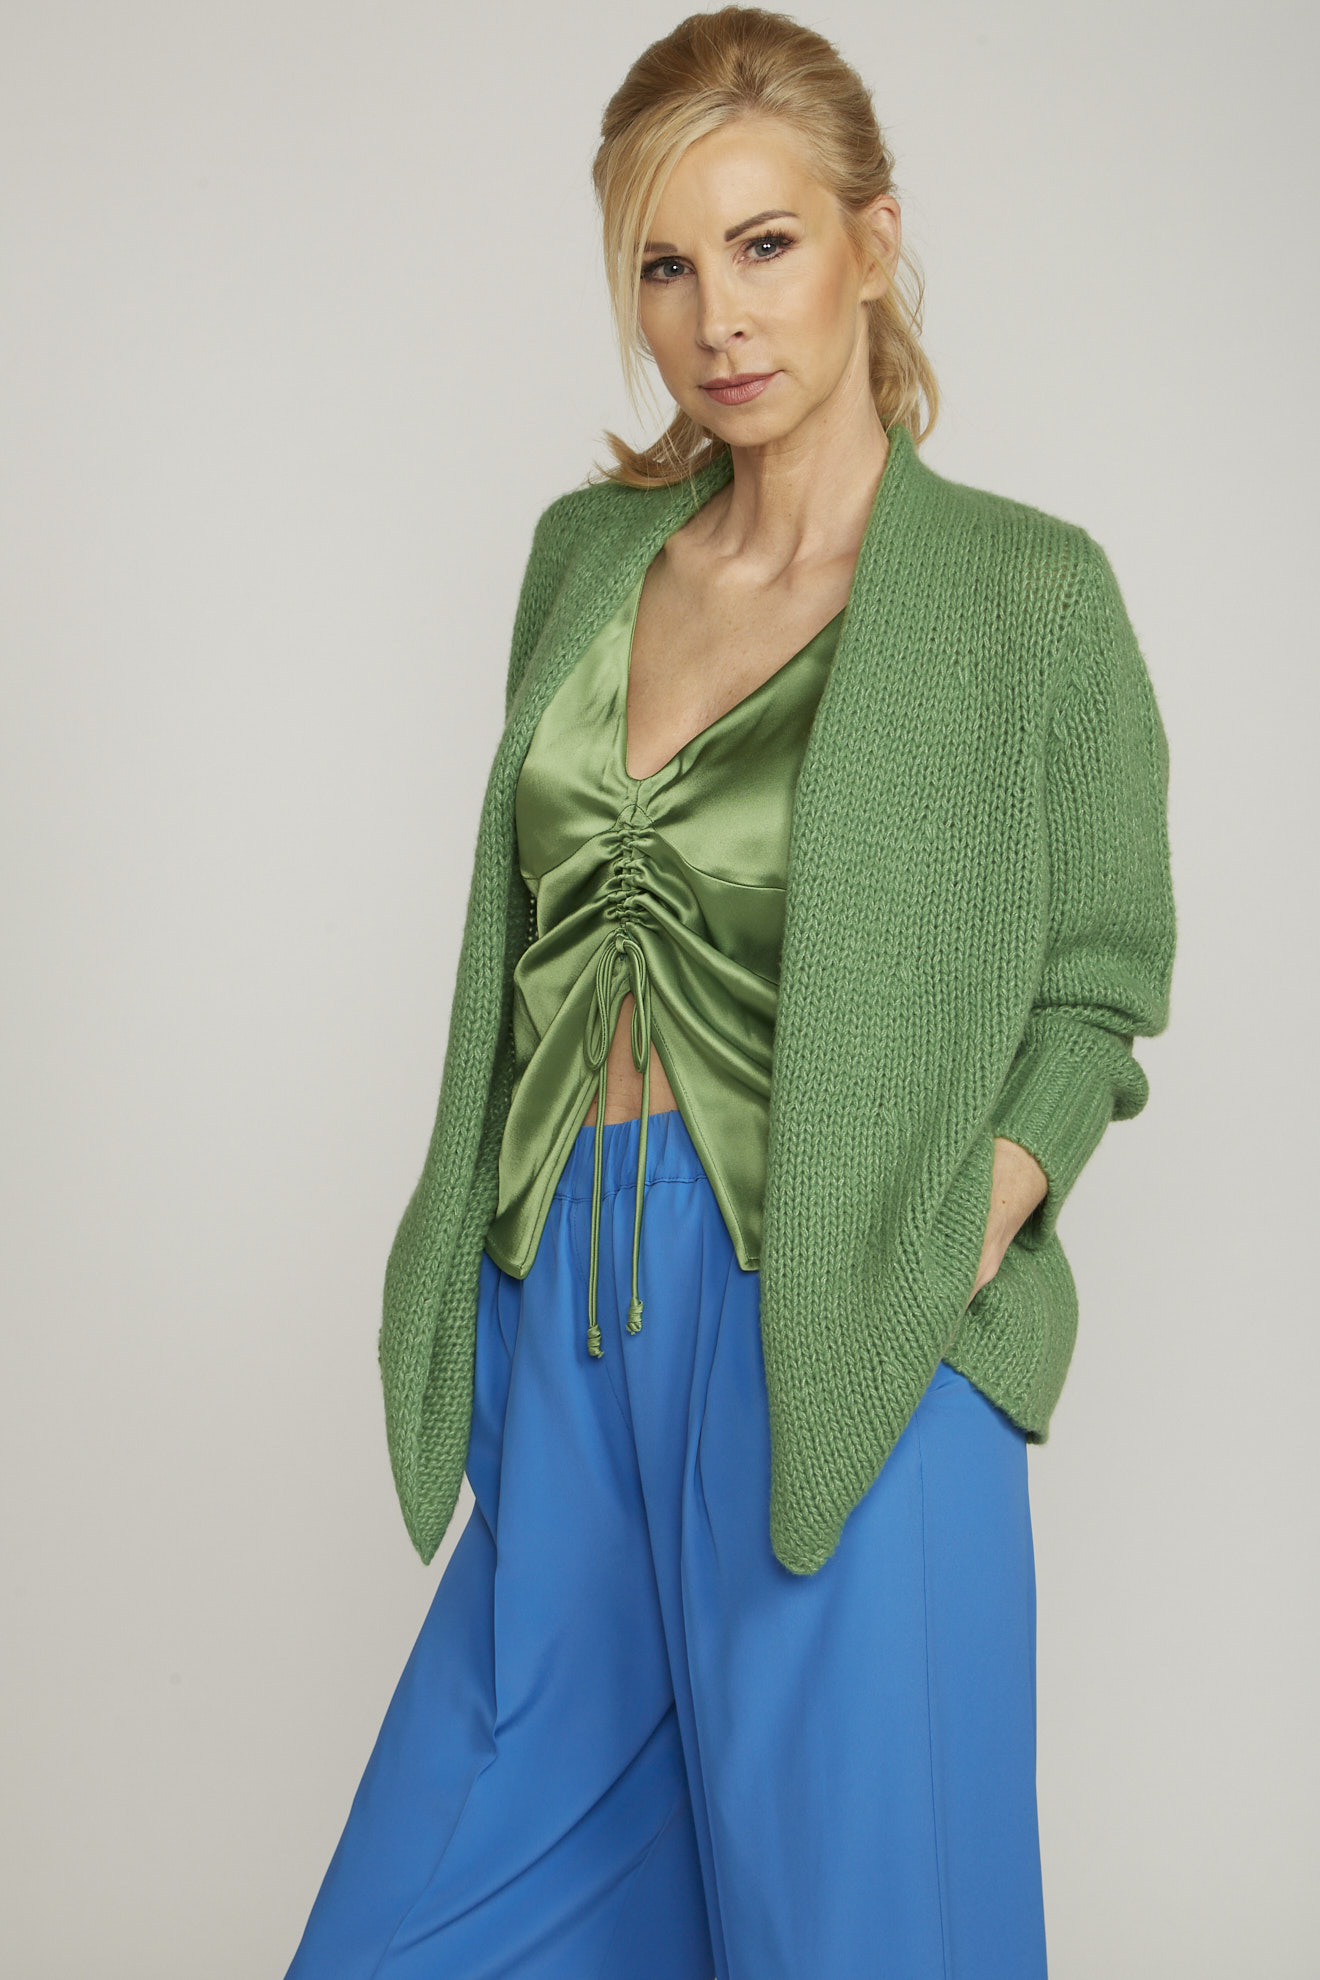 lu ren jacket green plain cashmere model front